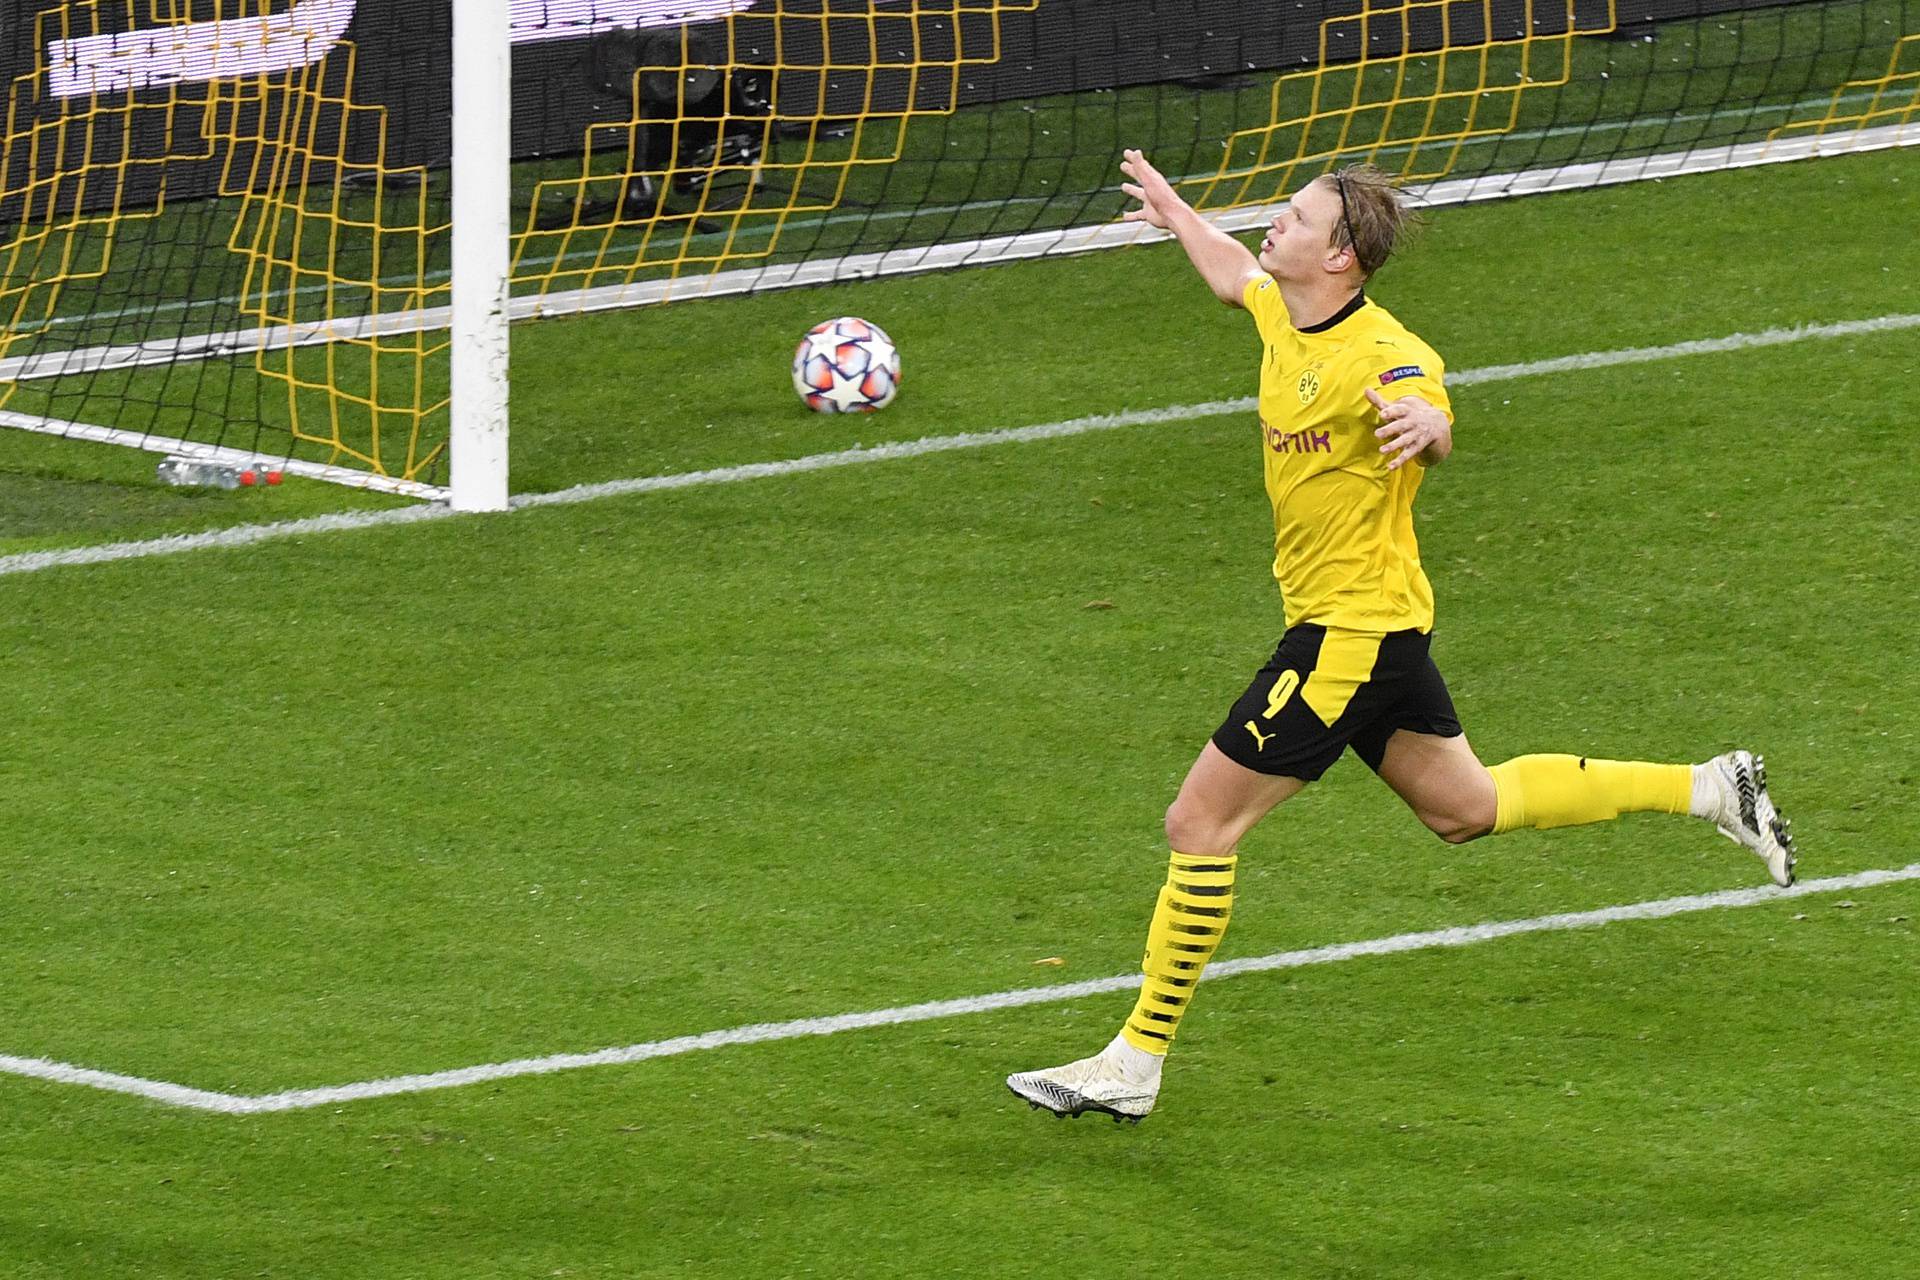 Champions League - Group F - Borussia Dortmund v Zenit Saint Petersburg